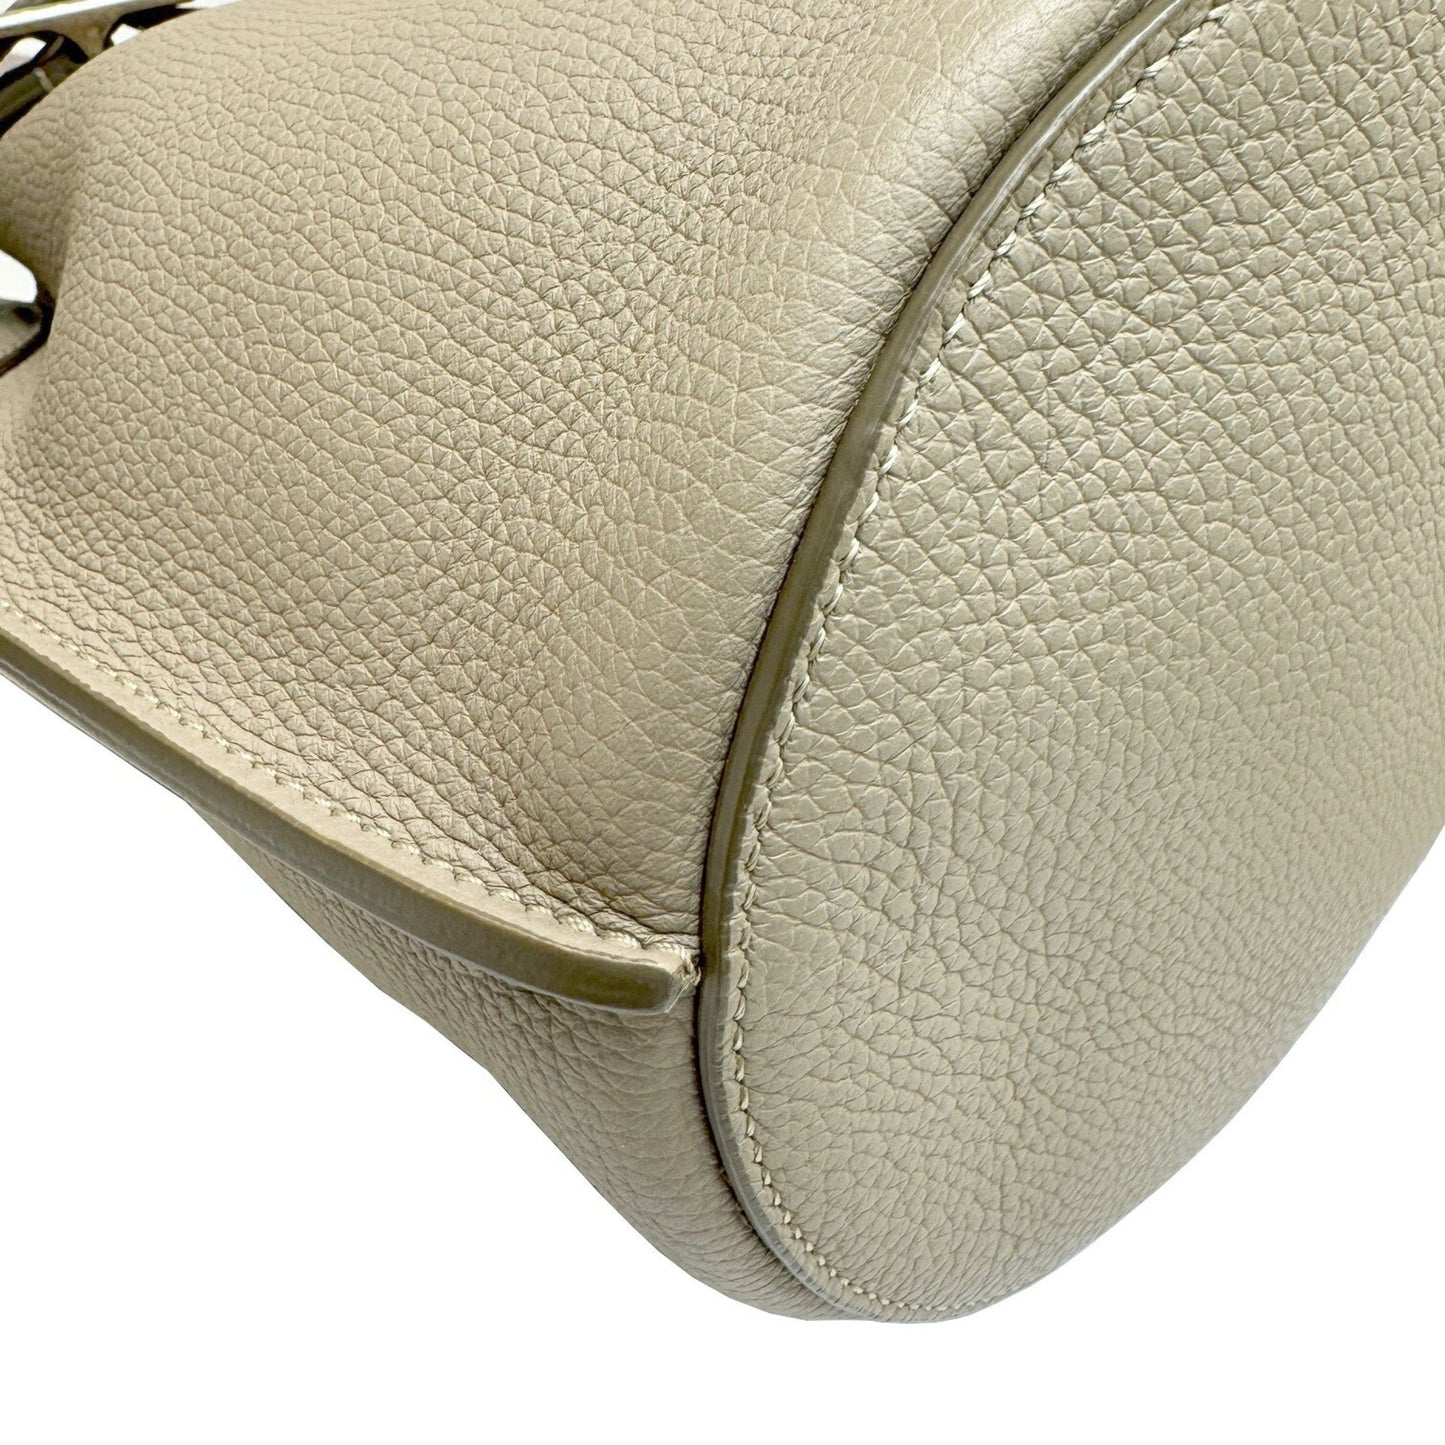 Celine Women's Ecru Leather Handbag with Shoulder Strap in Ecru